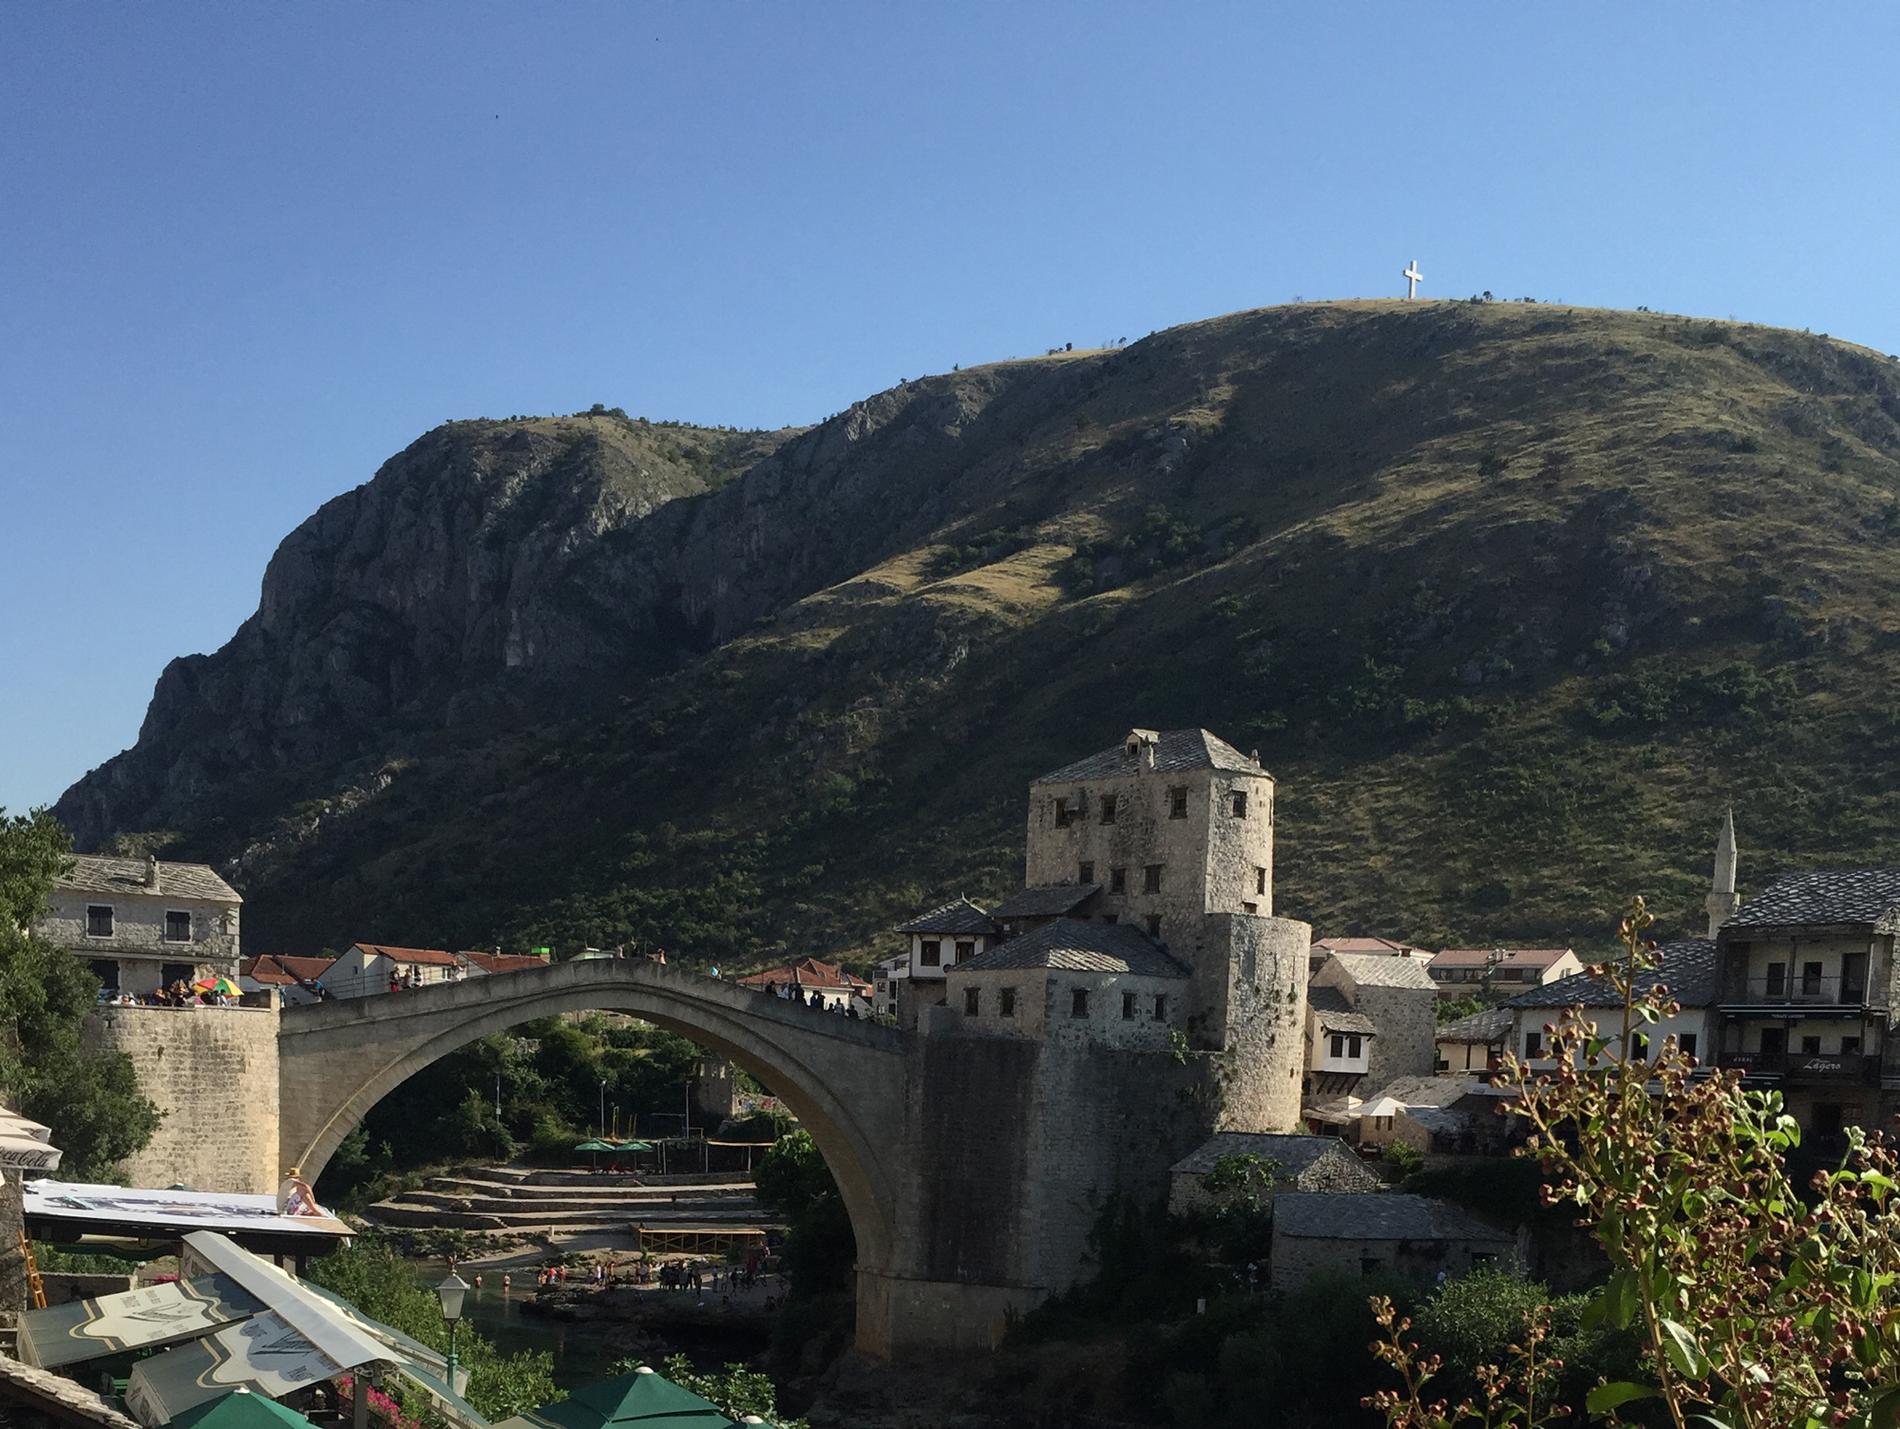 Bron som delar staden Mostar. Foto Lidija Praizovic